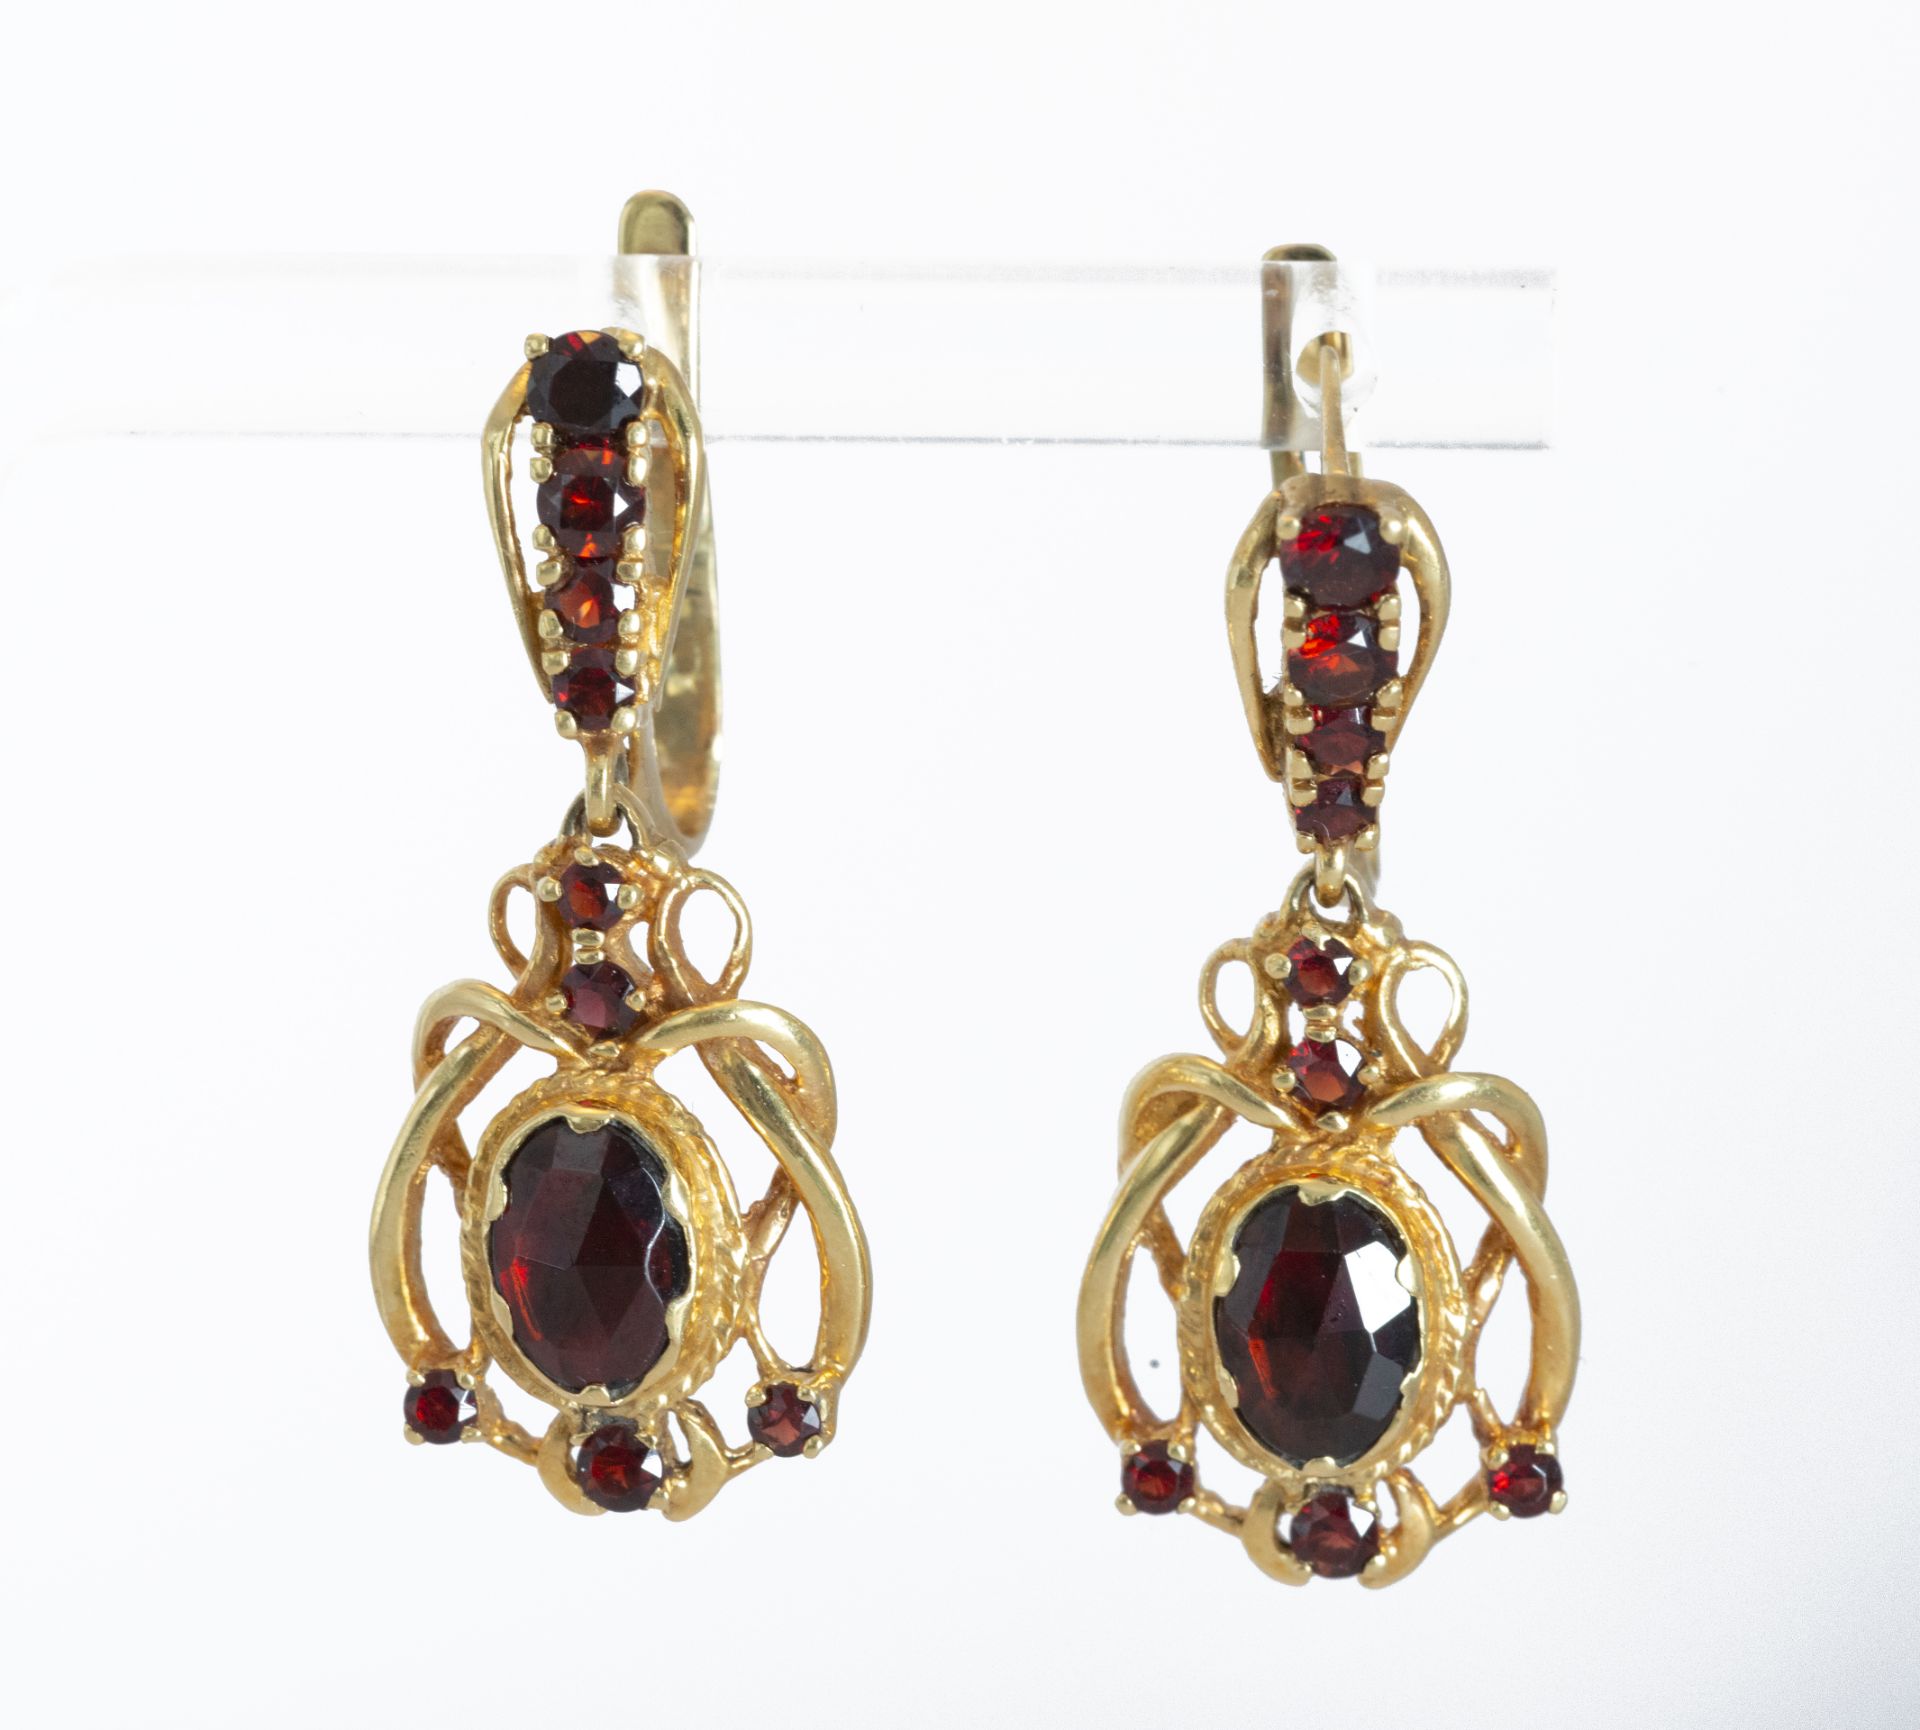 18kt gold earrings with garnets